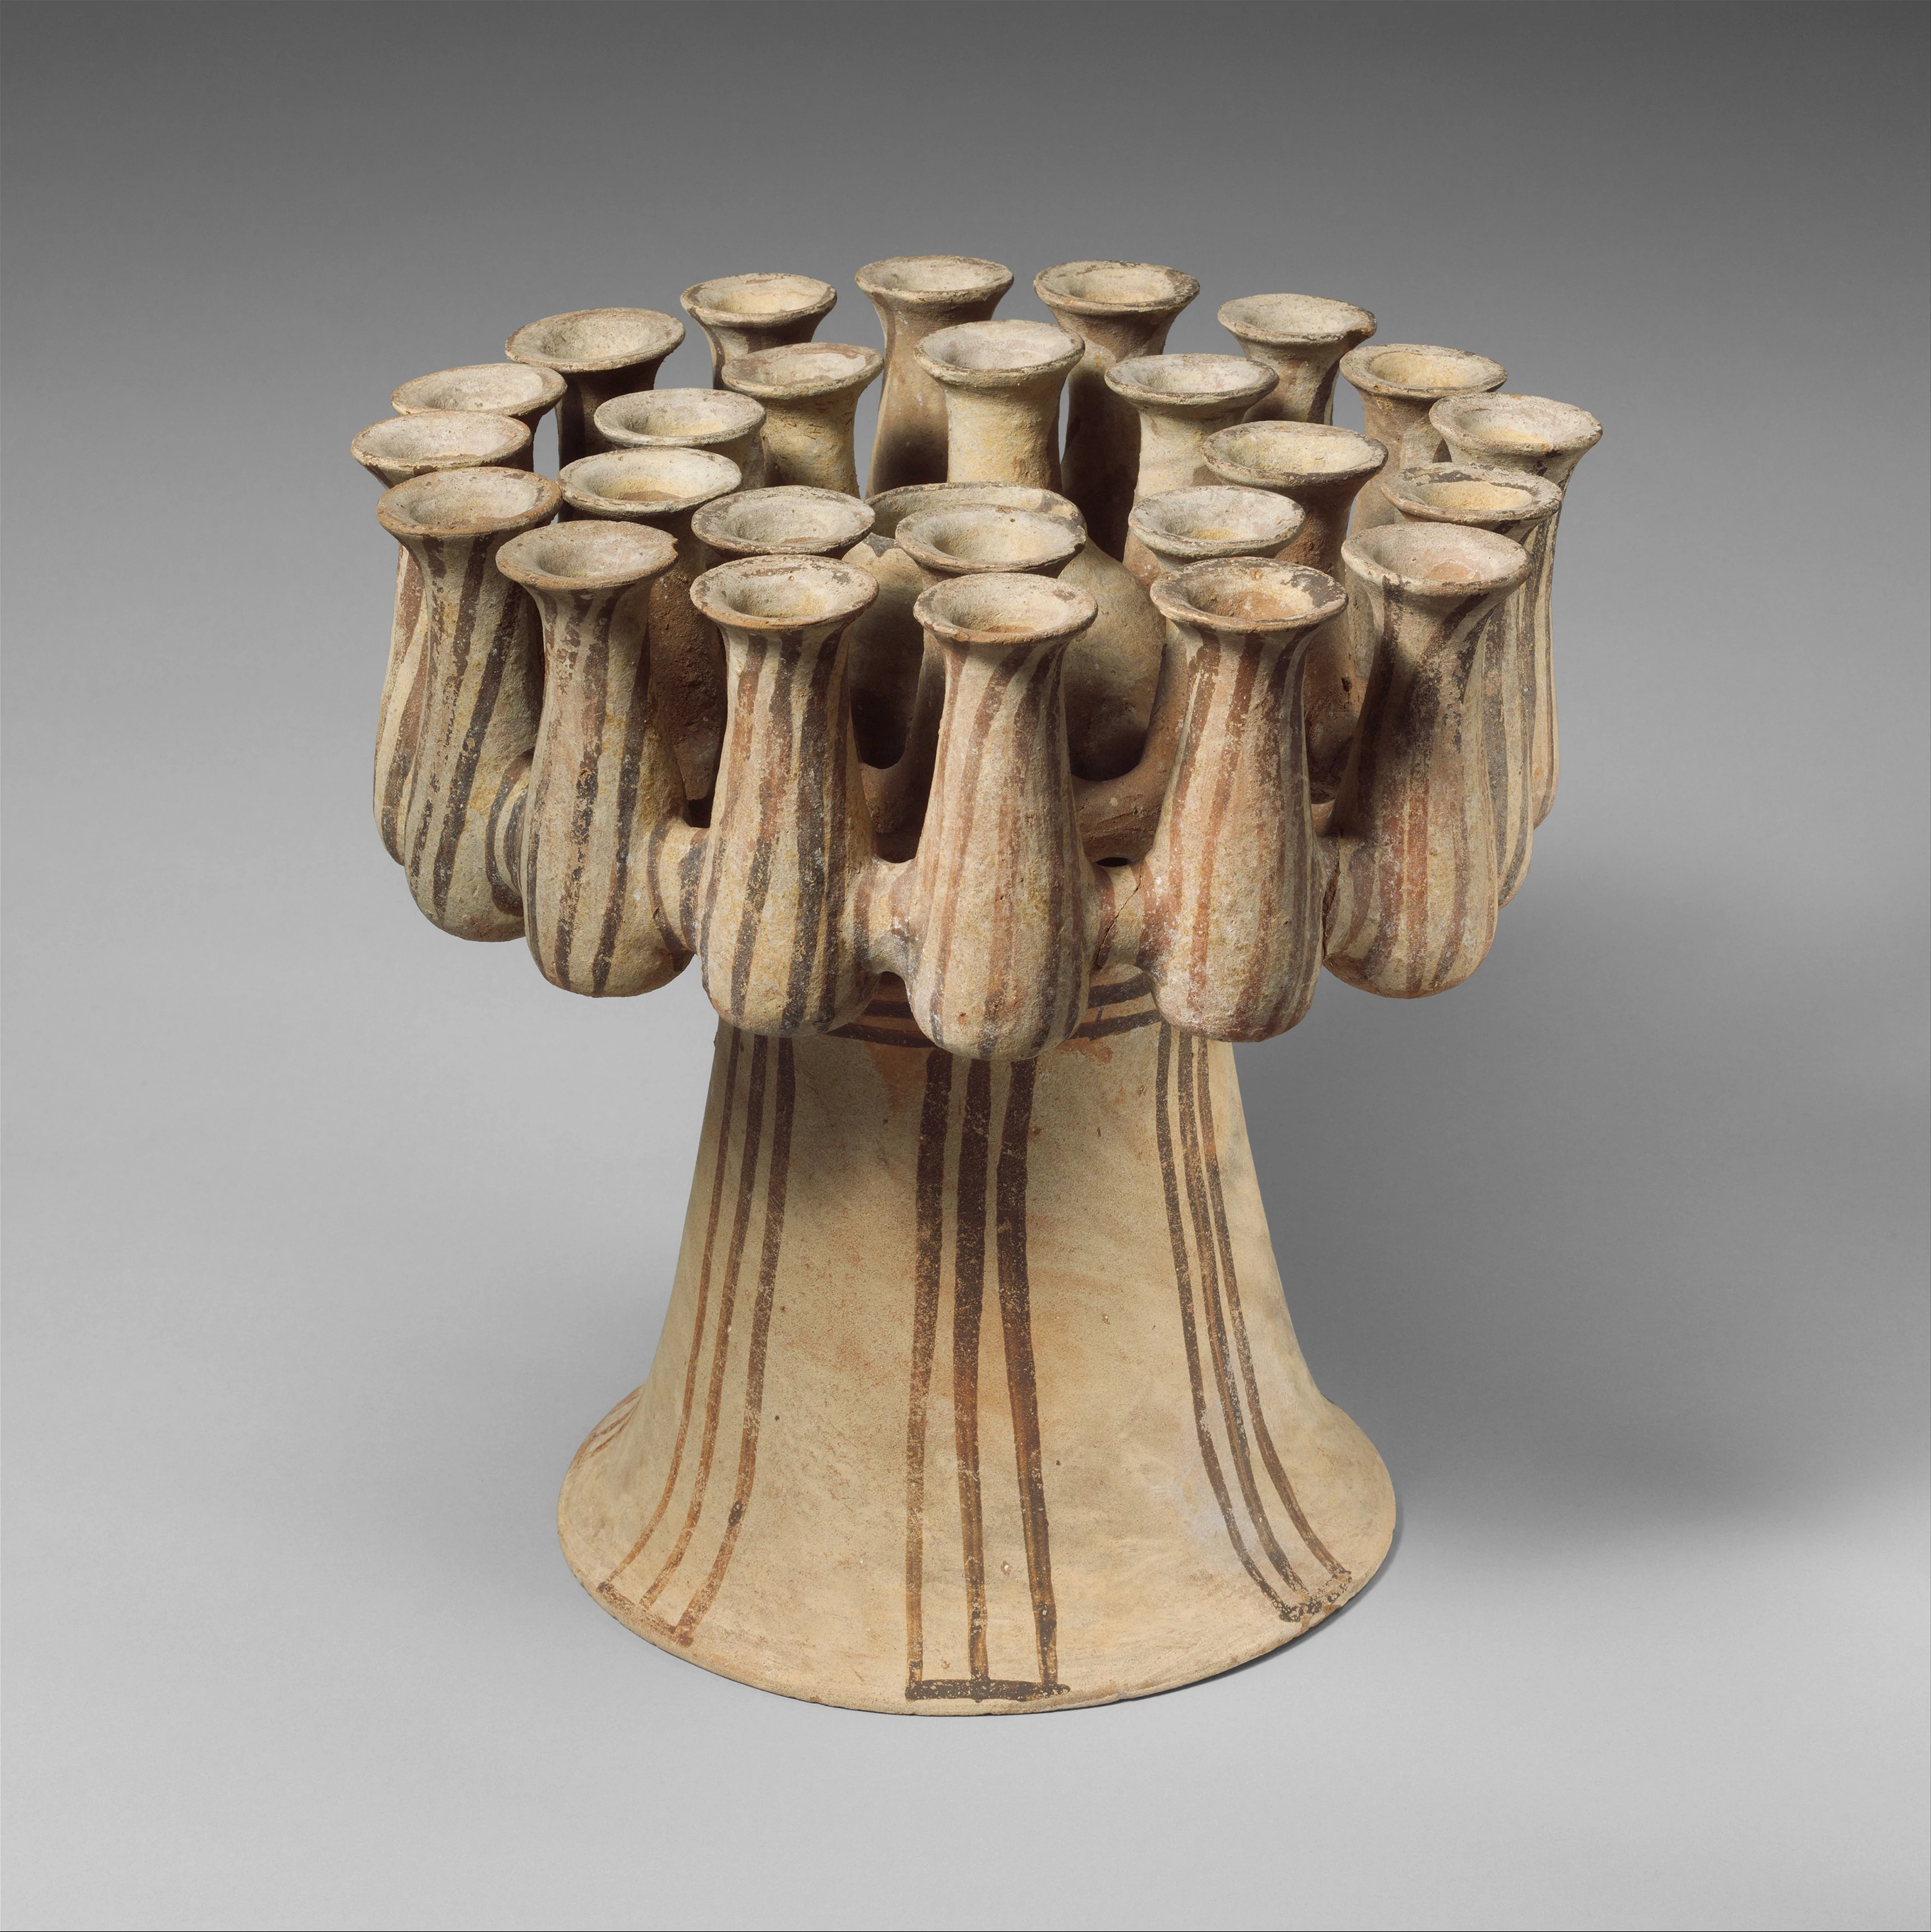 Cycladic Kernos — Vase for Offerings, Aegean Civilizations